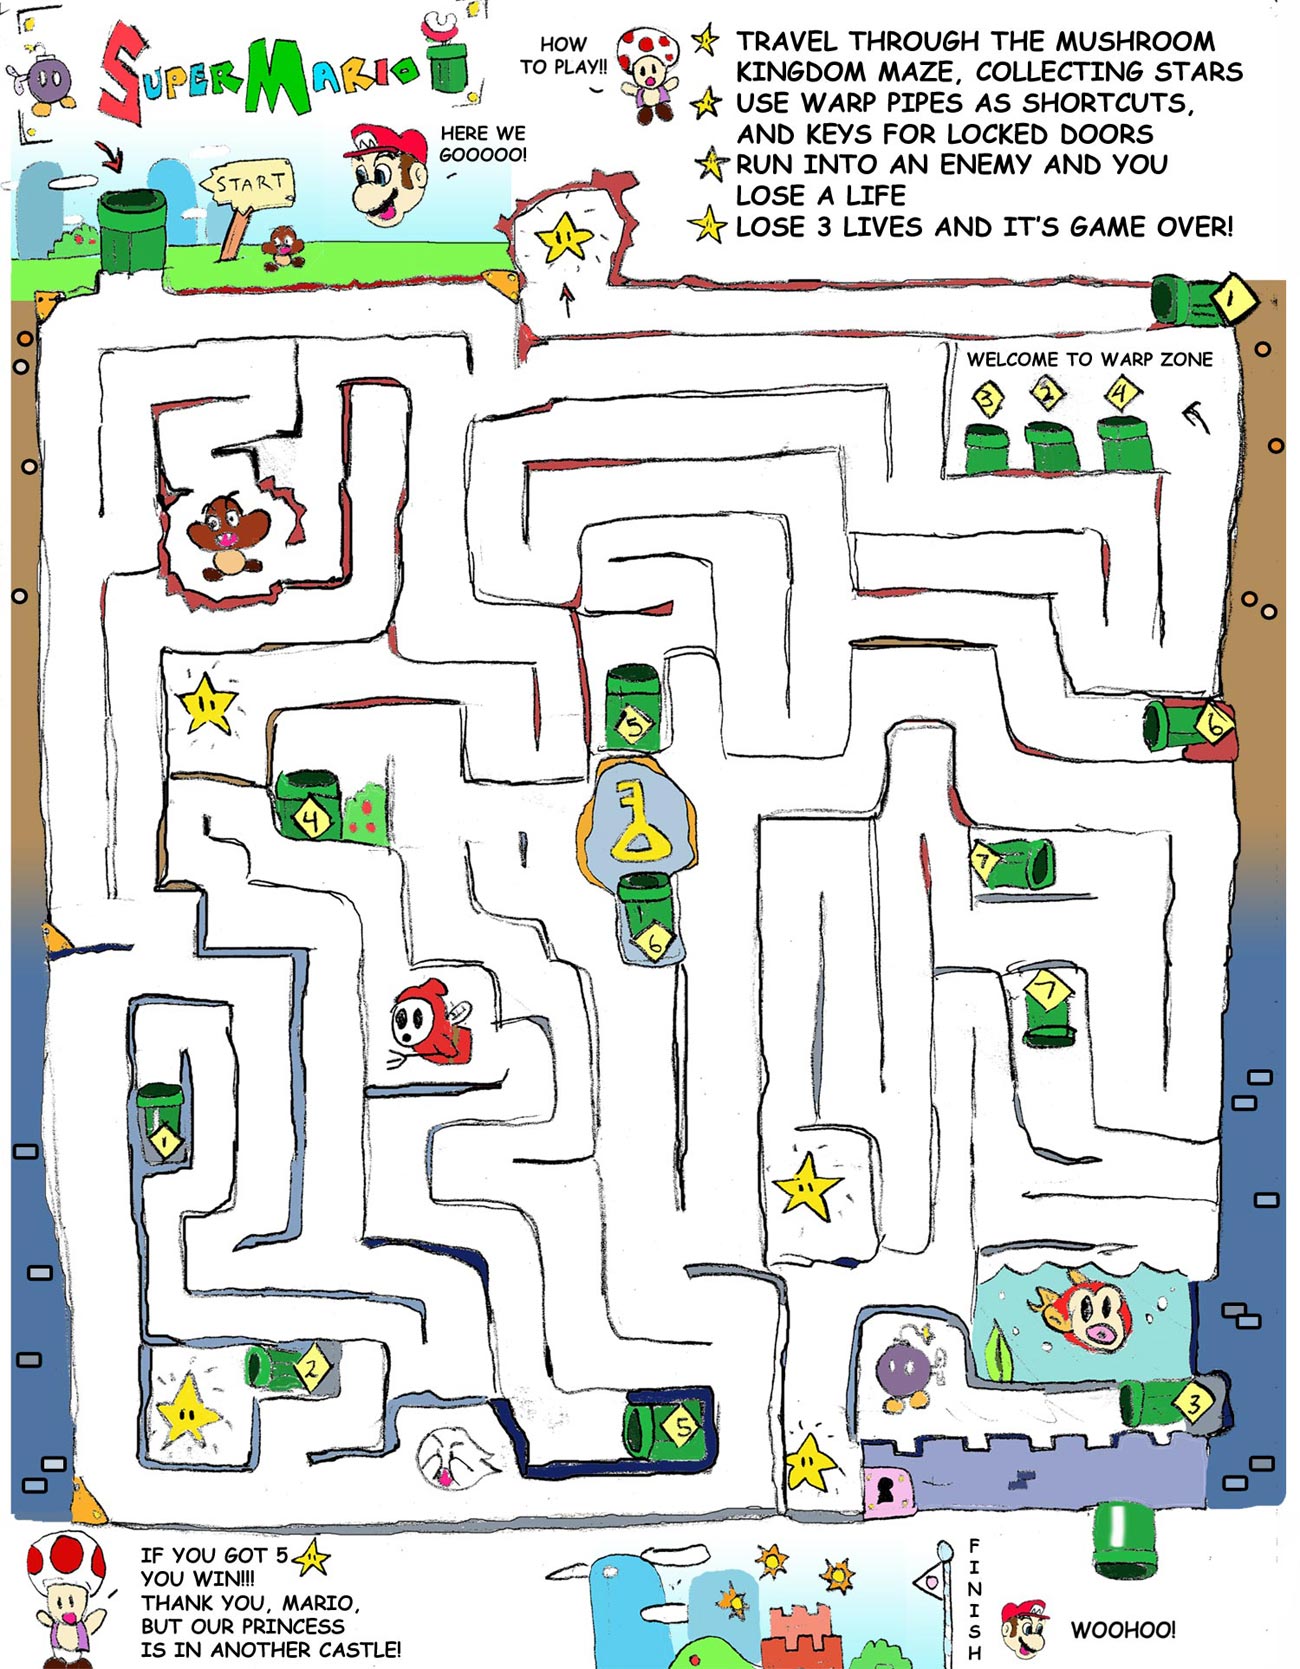 Super Mario: 'The Mushroom Kingdom Maze'